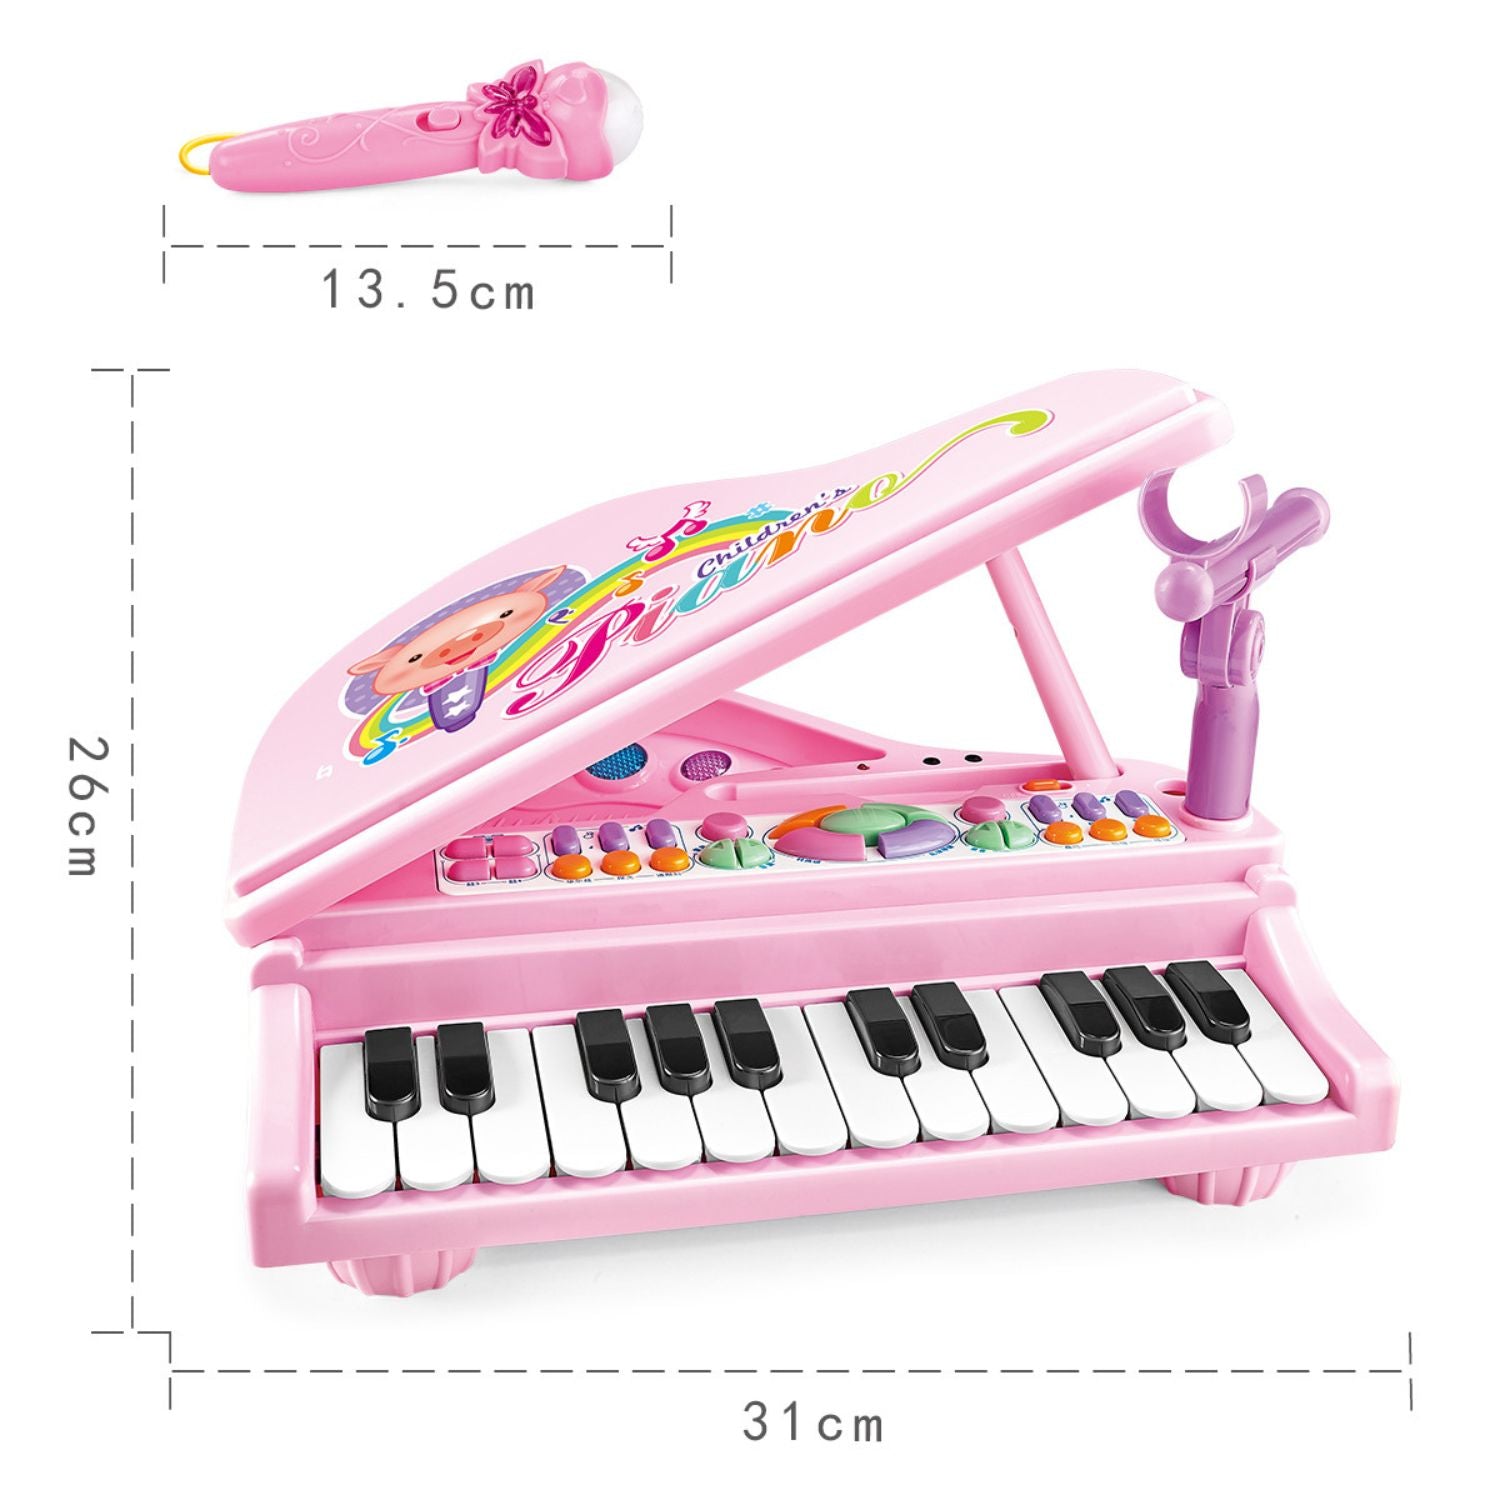 GOMINIMO Kids Piano Keyboard Music Toys (Pink)